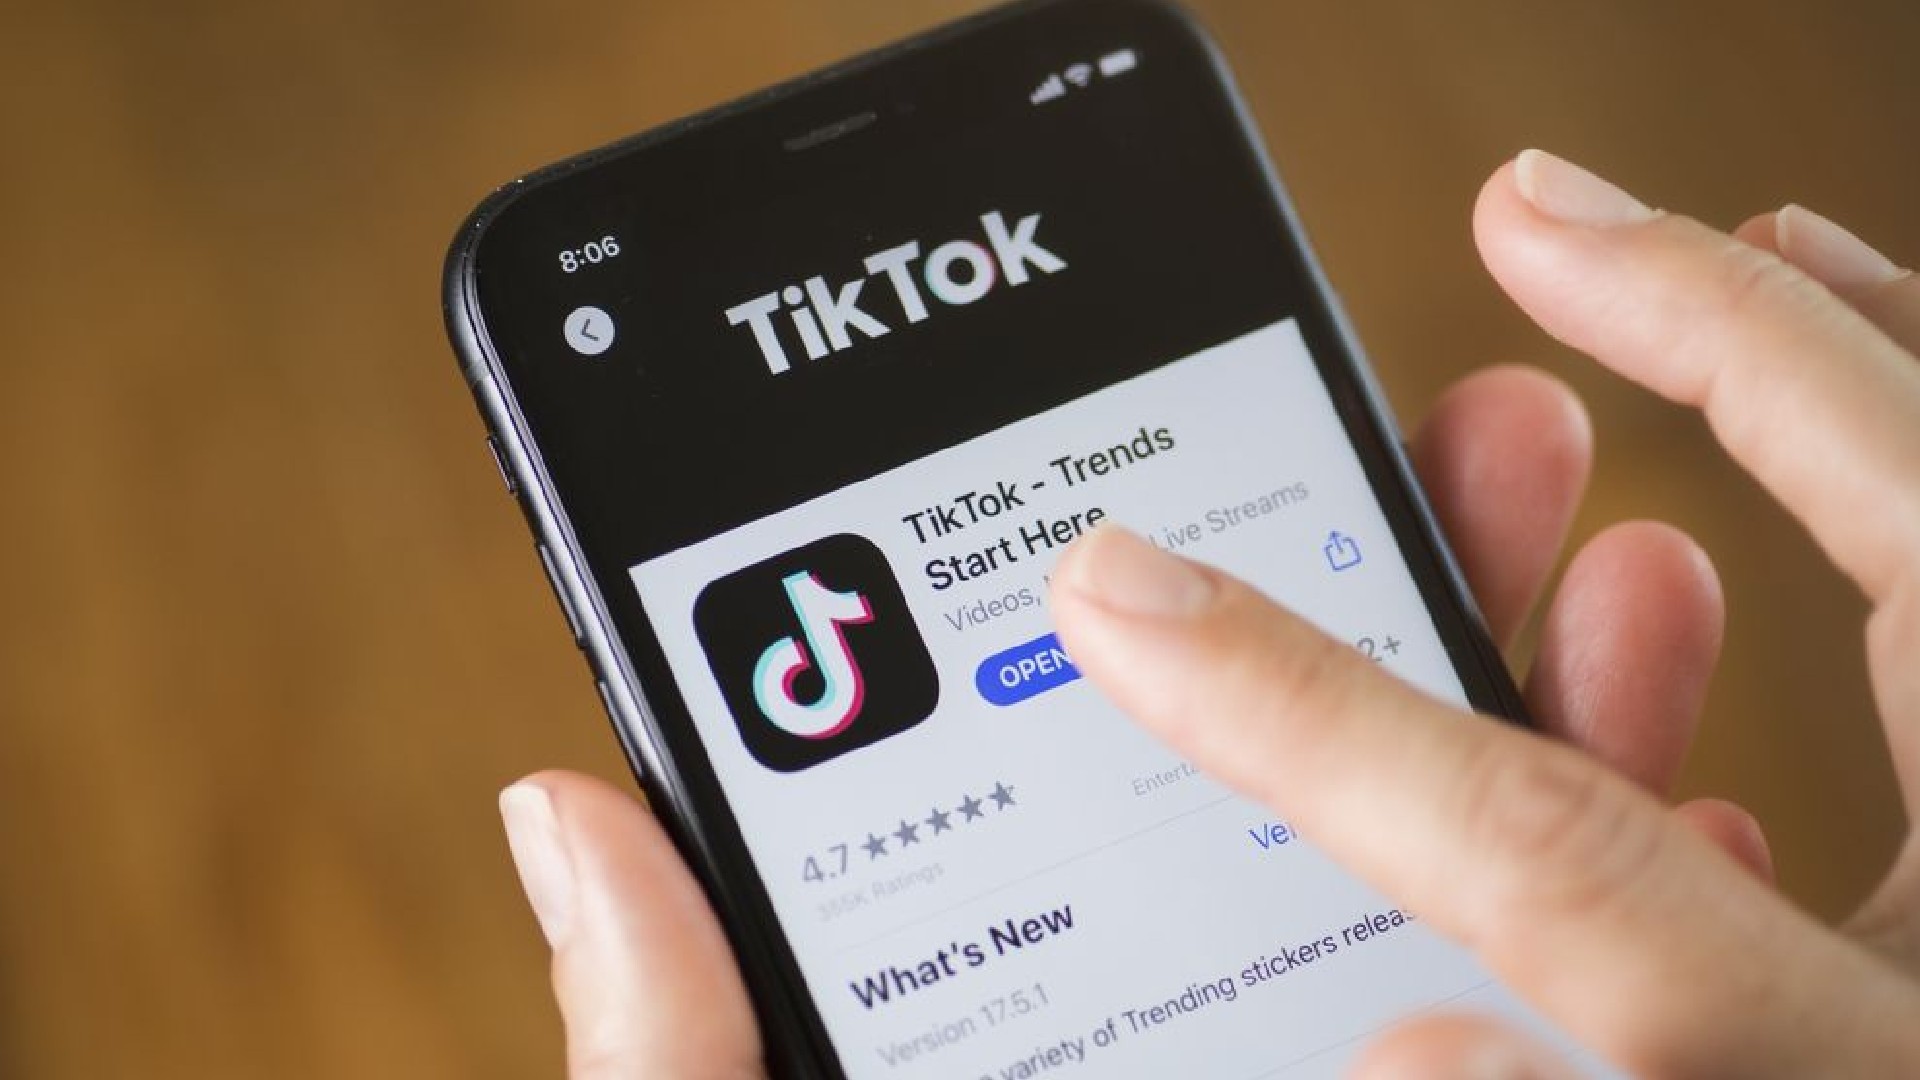 ByteDance sells TikTok’s AI technology to Indian companies